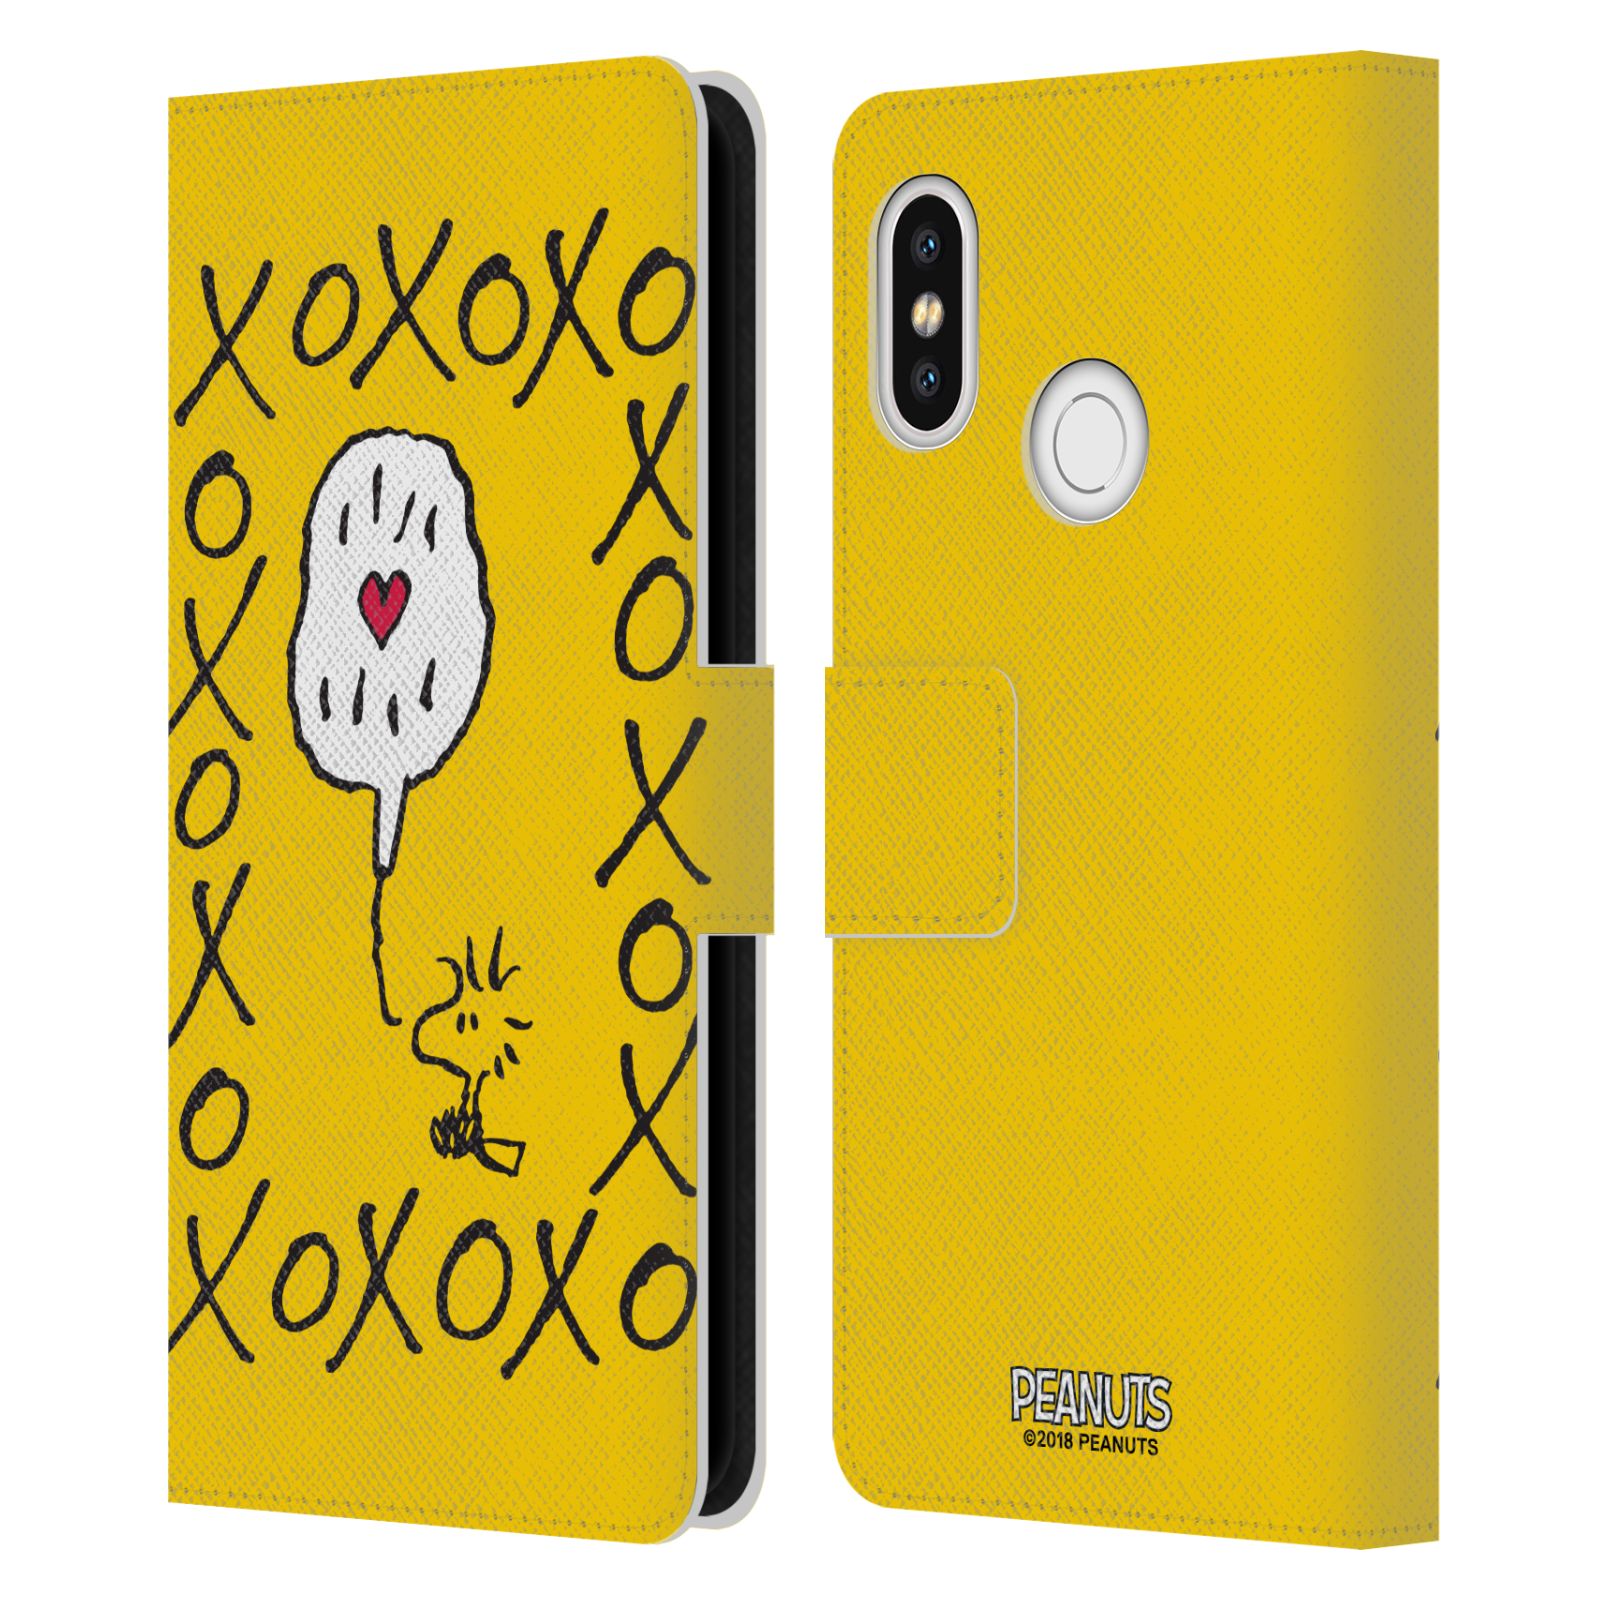 Pouzdro na mobil Xiaomi Mi 8 - Head Case - Peanuts - Woodstock ptáček XOXO